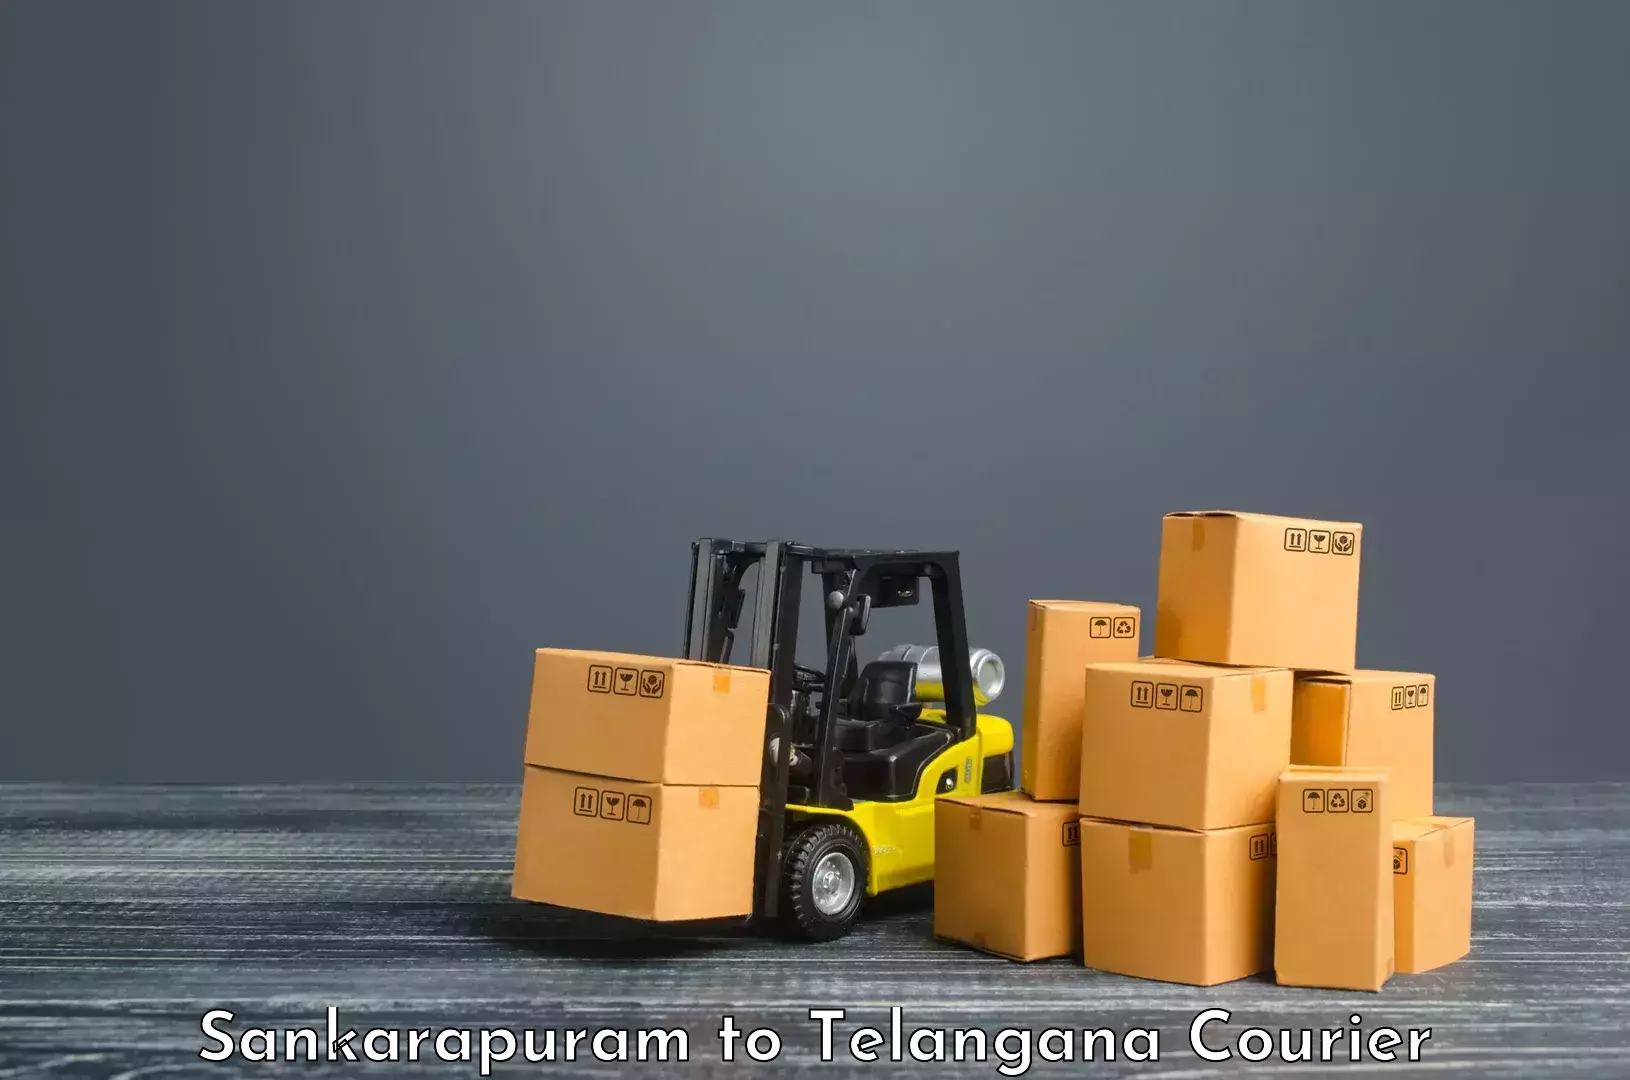 Package delivery network Sankarapuram to Telangana